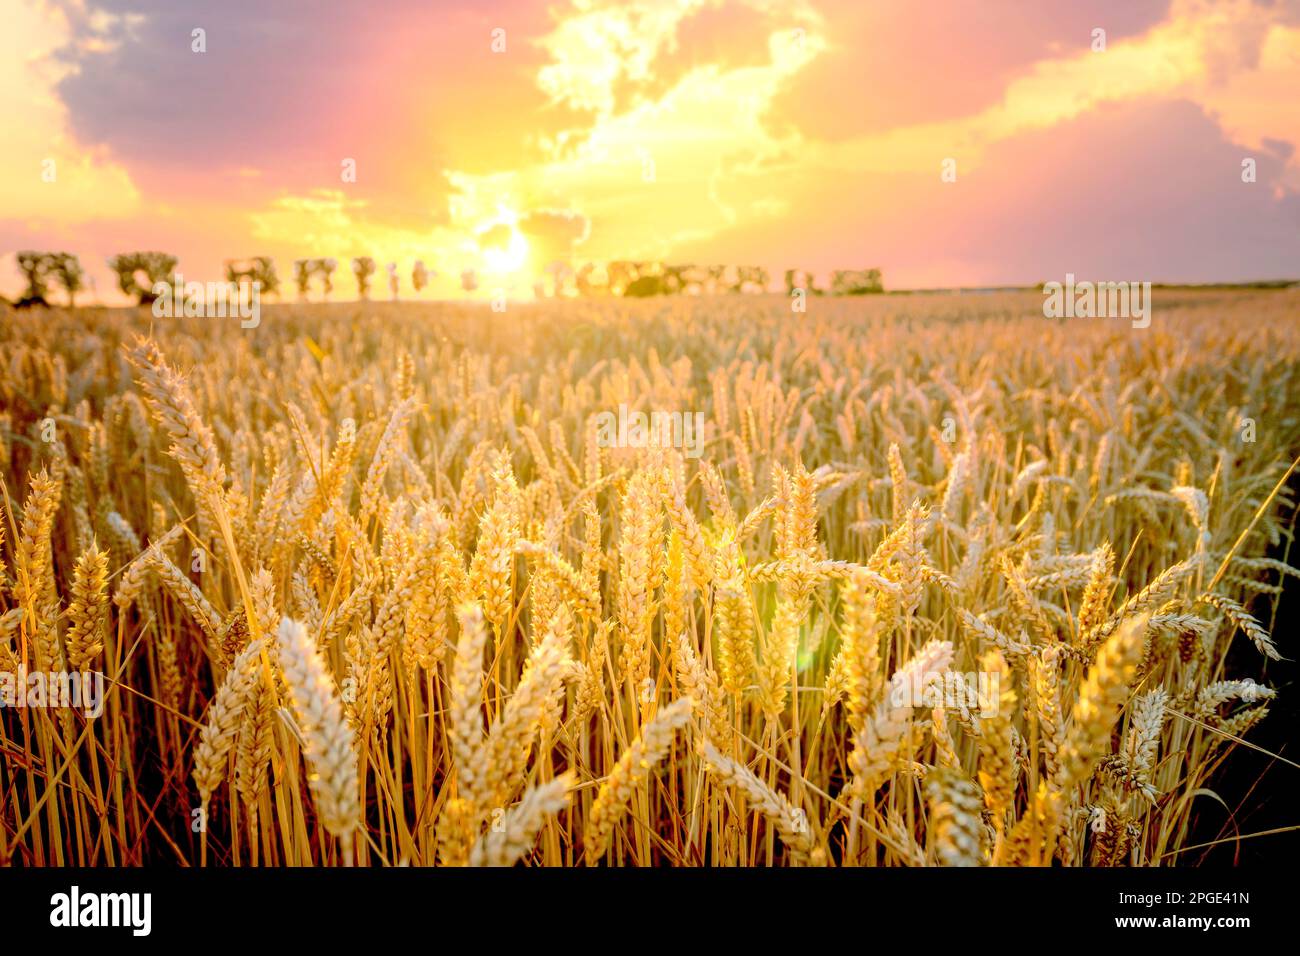 Farmining fields in sunset, Germany Stock Photo